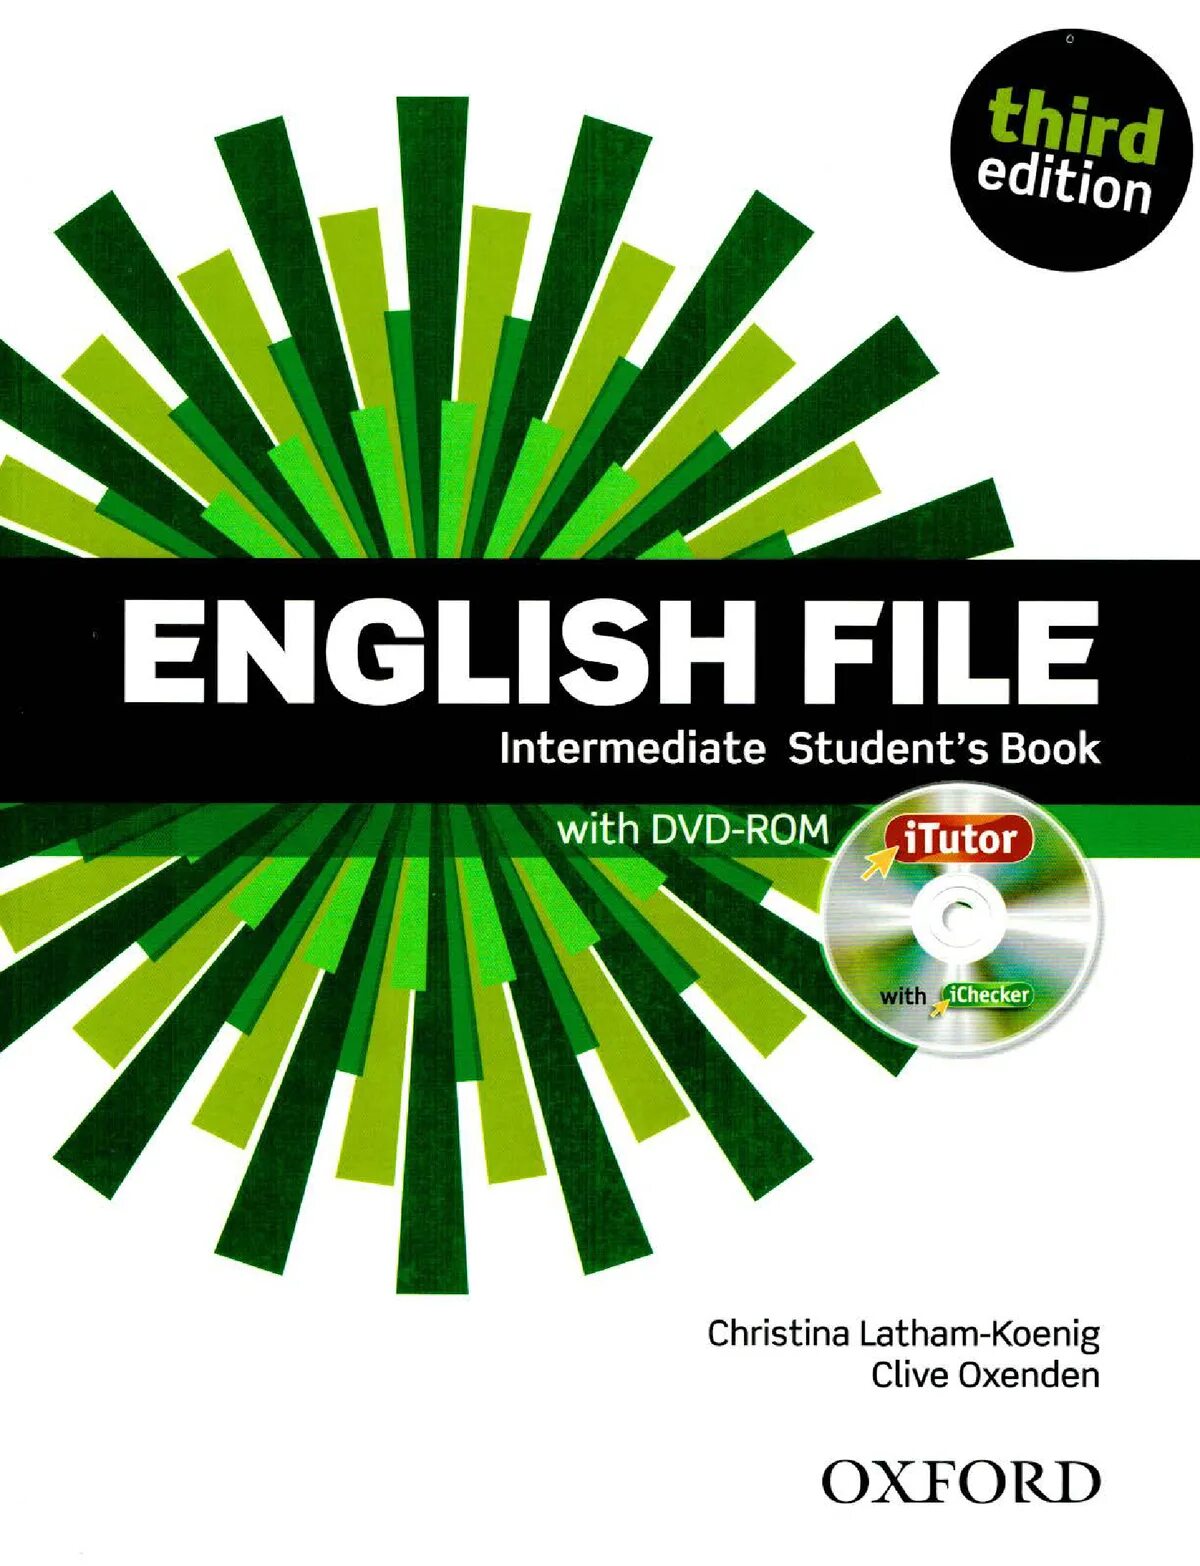 English file inter. English file Intermediate student's book third Edition. English file Intermediate 3rd Edition. New English file Intermediate student's book. English file pre Intermediate 3rd.